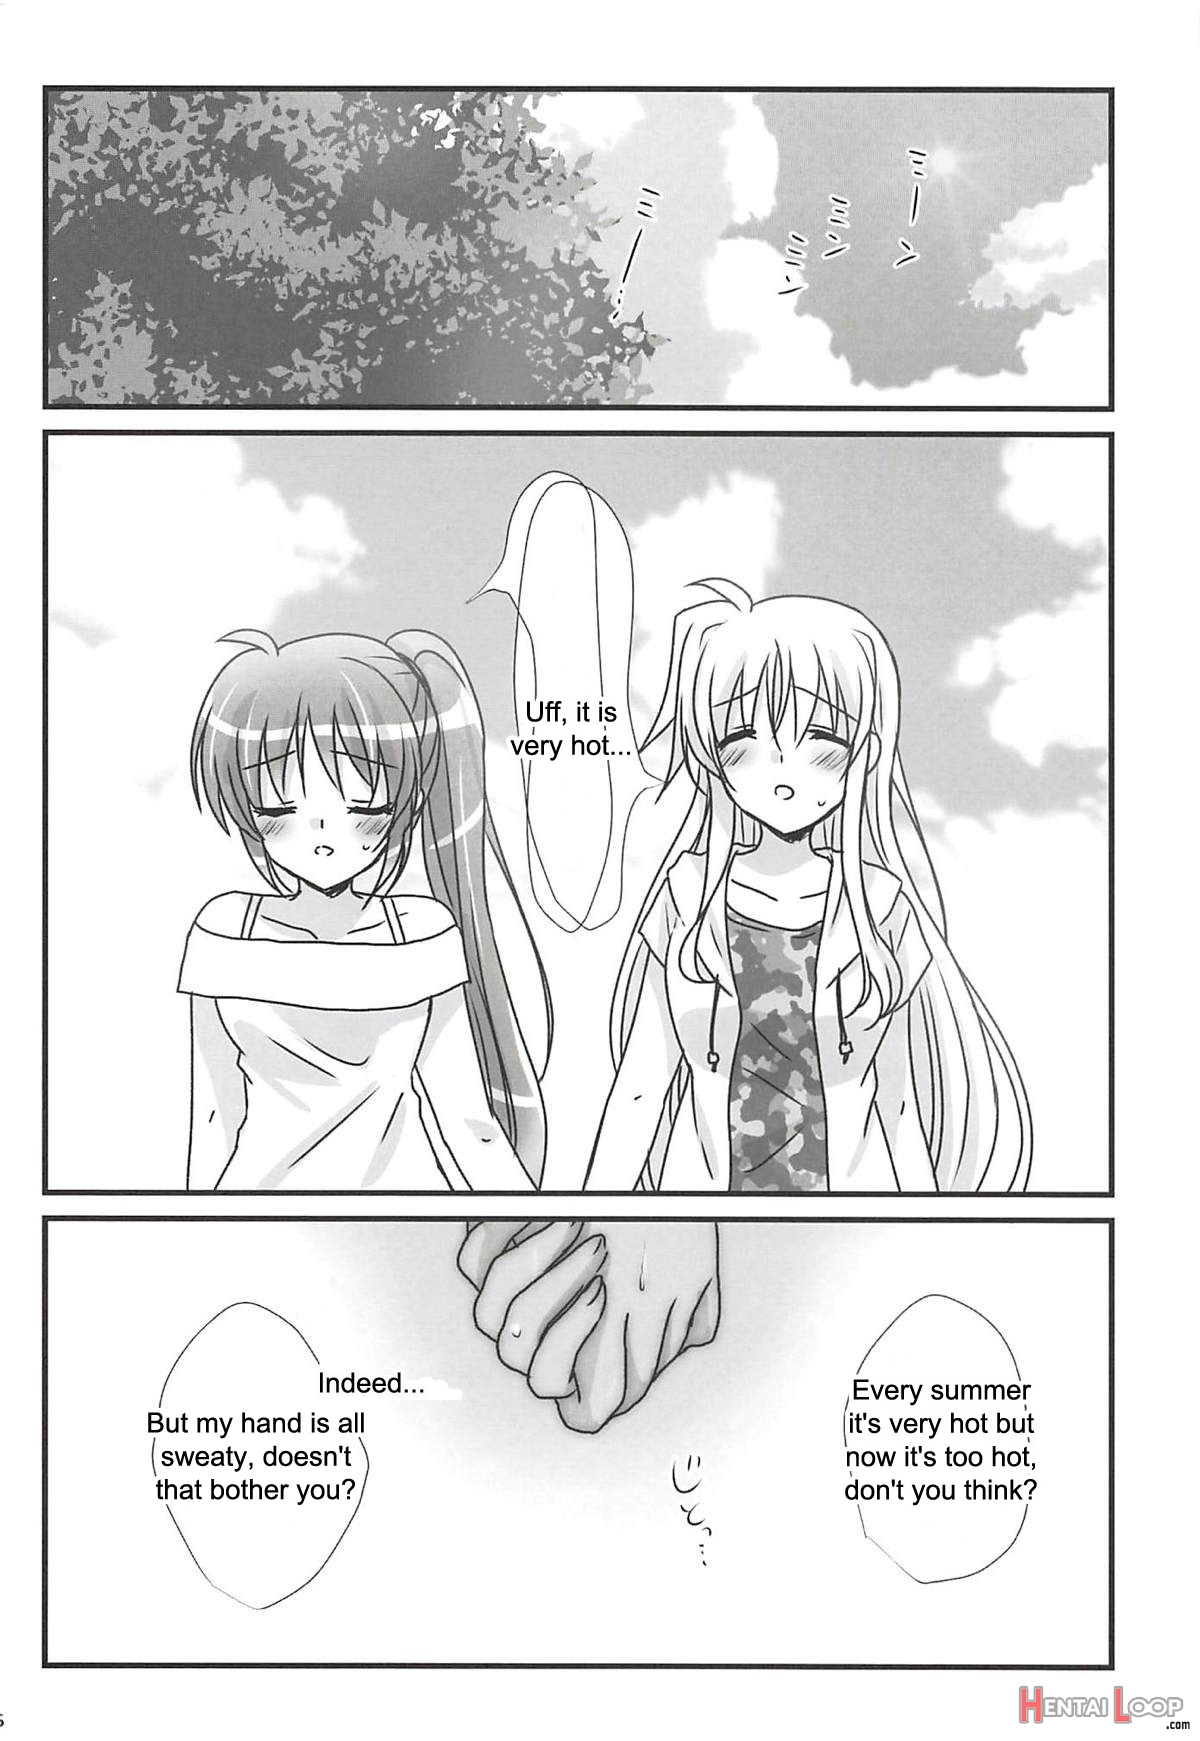 Natsudoke page 5